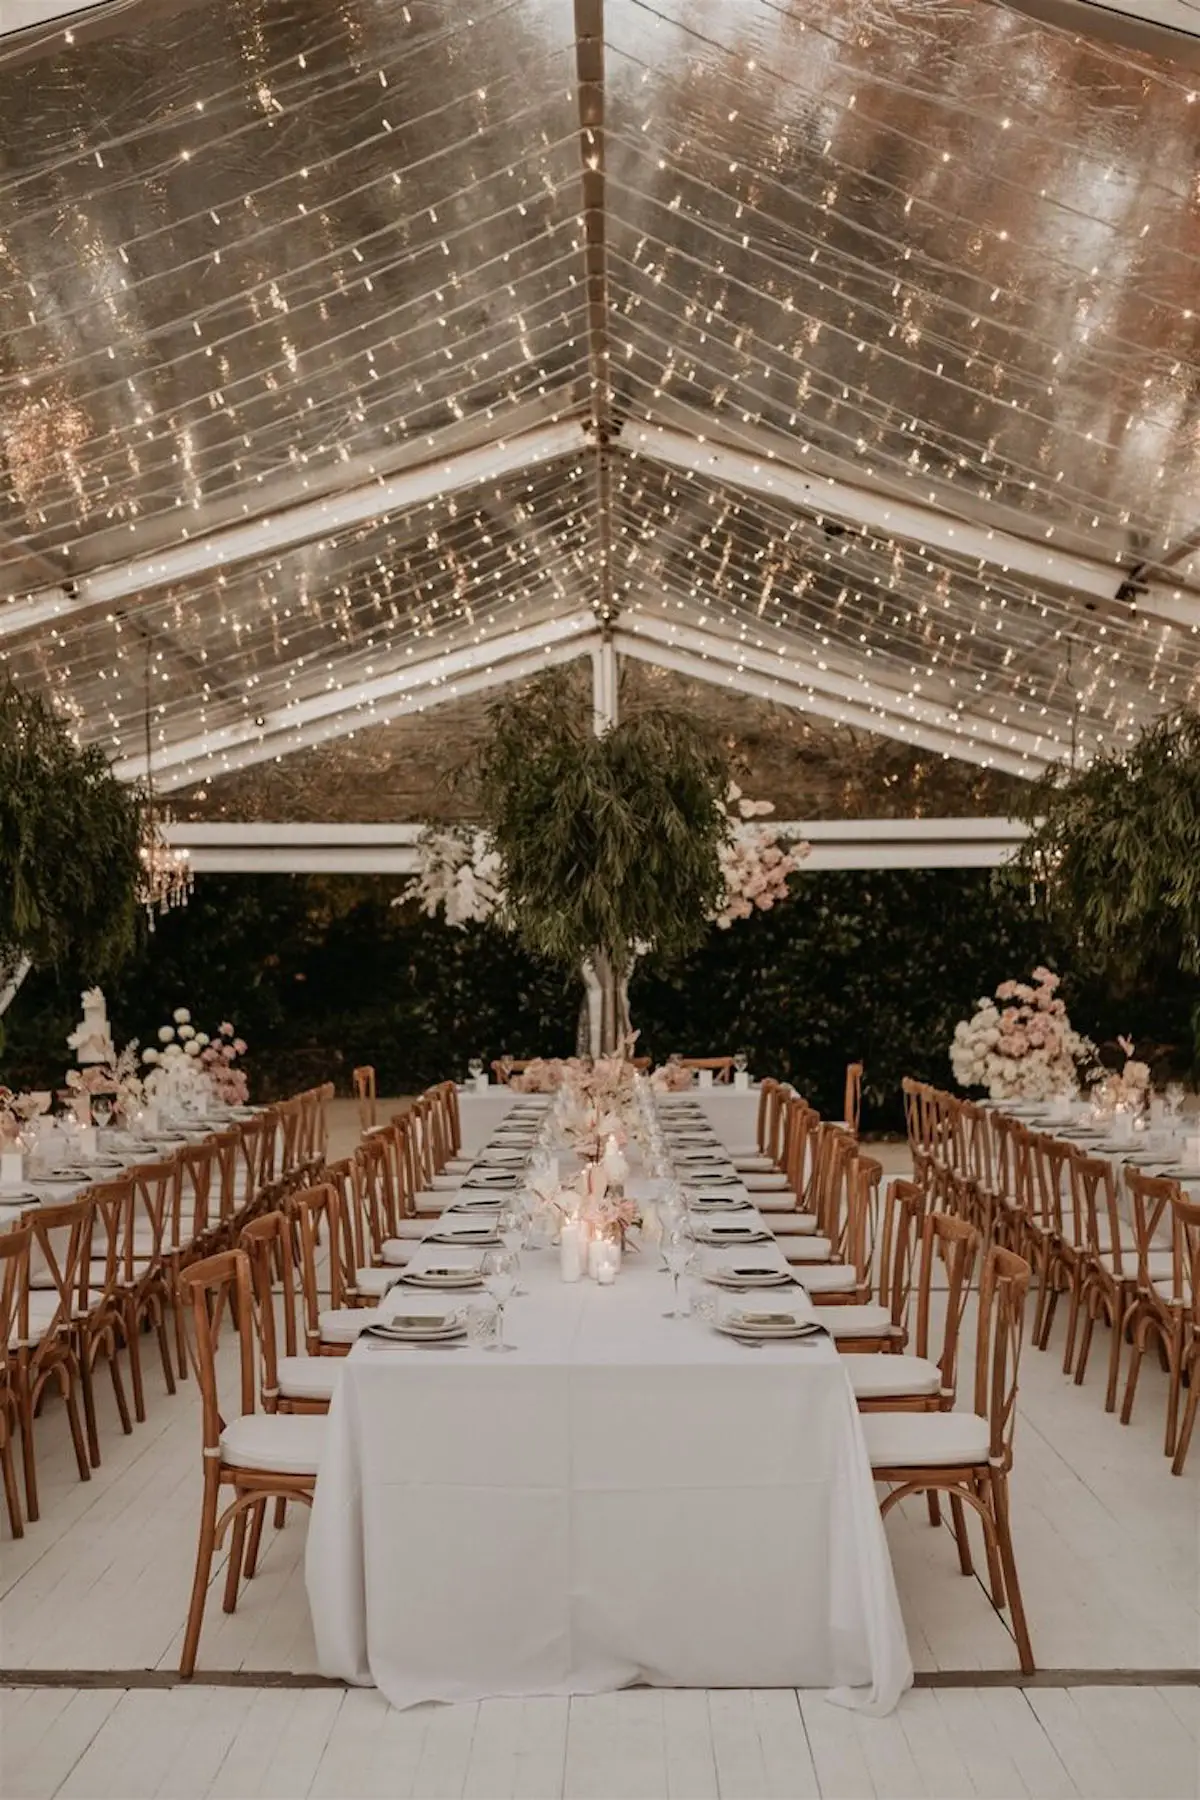 Fairy Lights Wedding Decor - via Knights Tent & Party Rentals